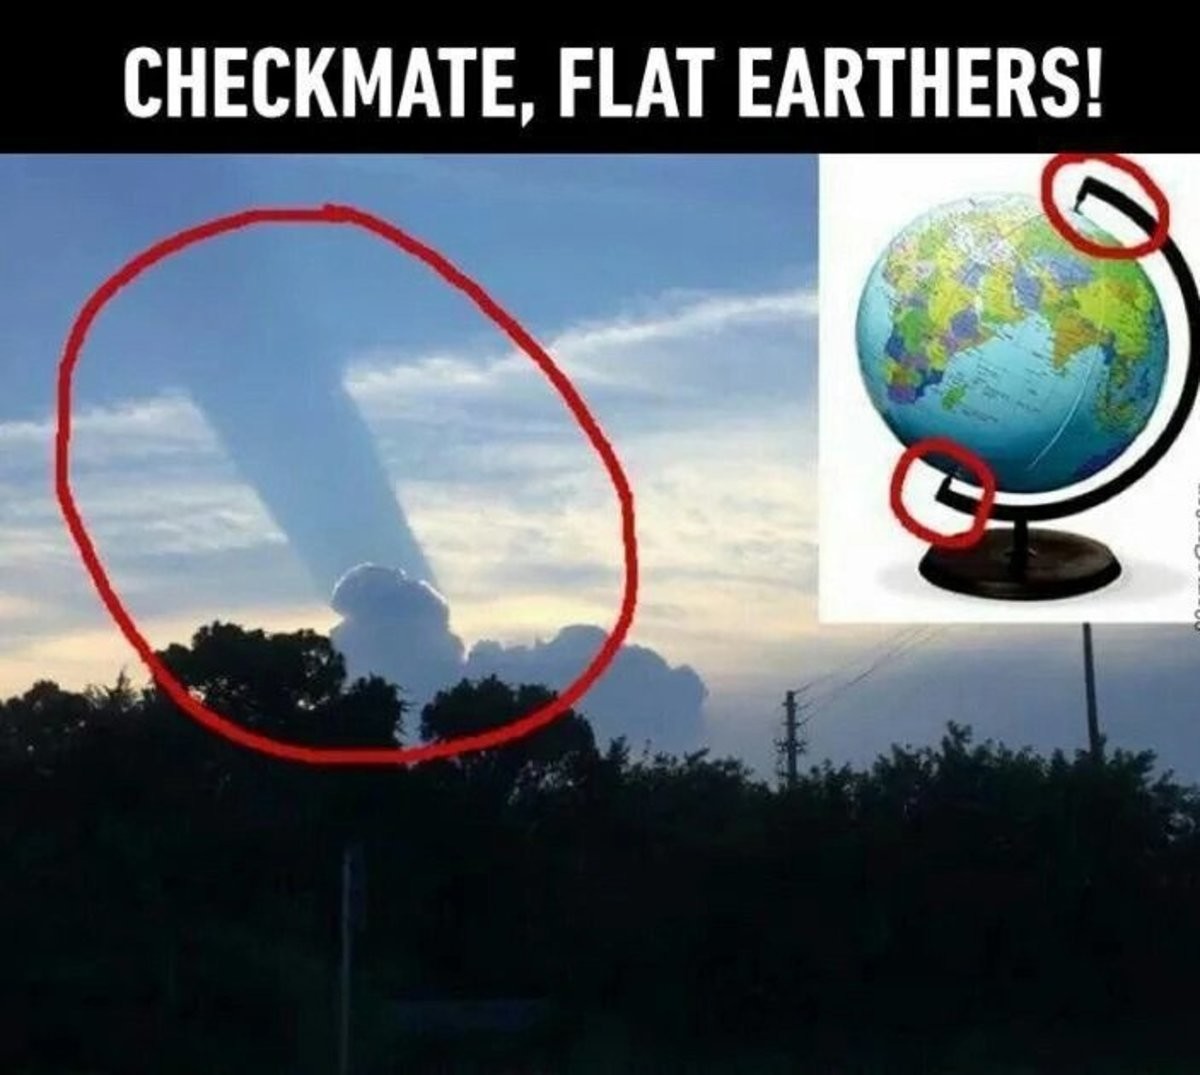 Checkmate+flat+earthers_26301b_6533599.jpg